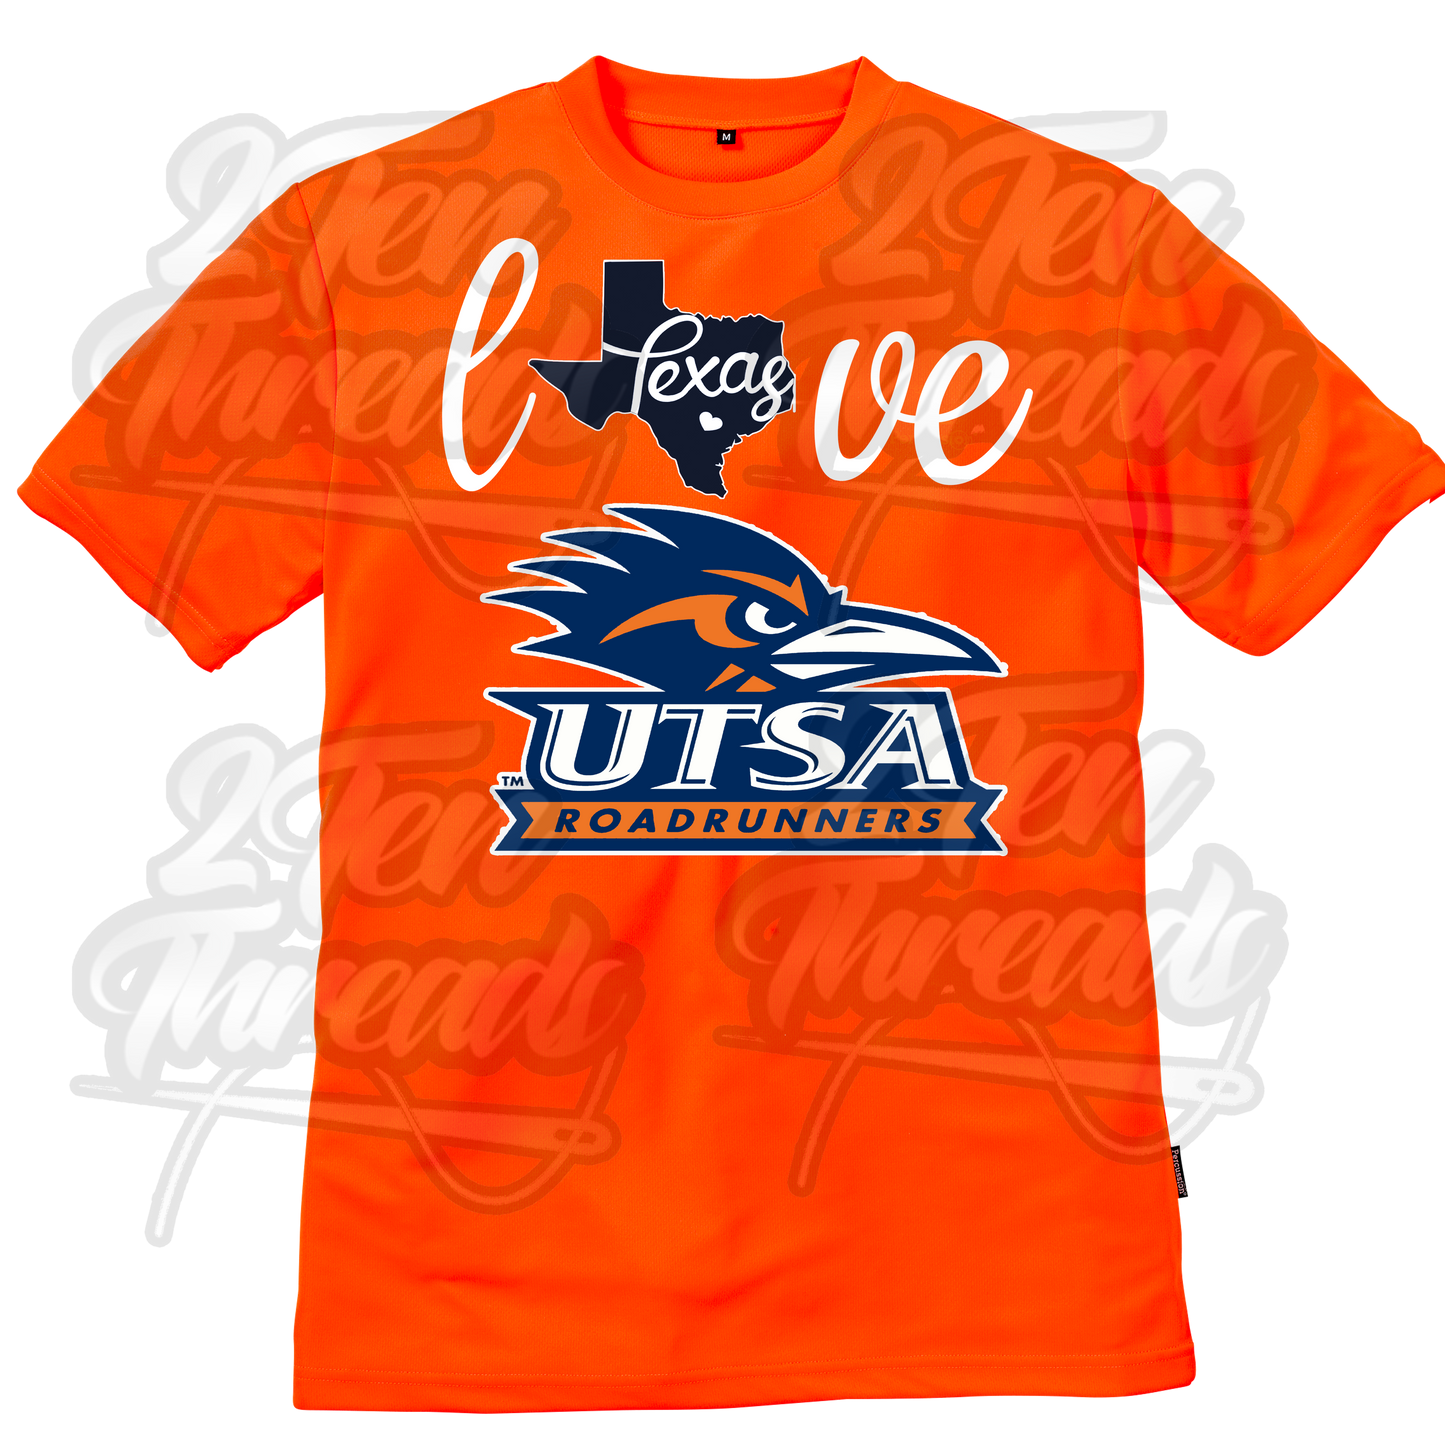 Love UTSA Shirt!